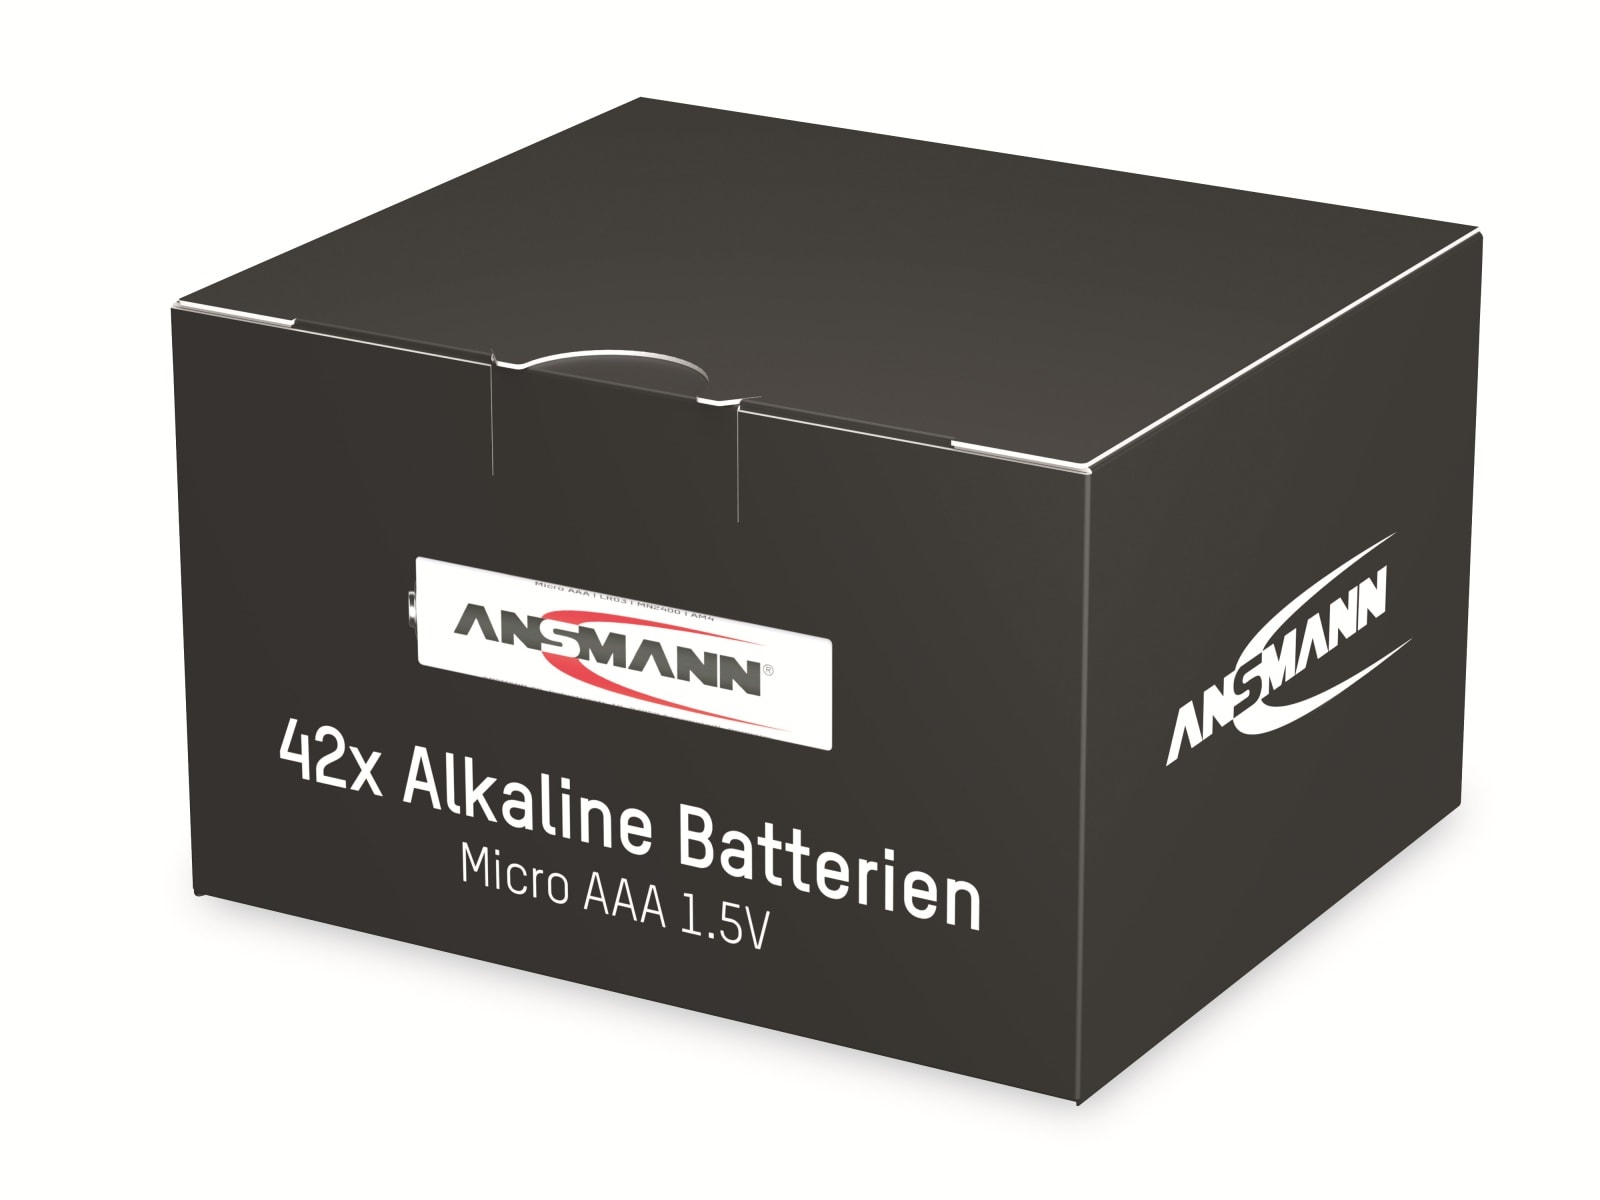 ANSMANN Alkaline Batterien, 42 Stück AA /Mignon und 42 Stück AAA/Micro im Sparset